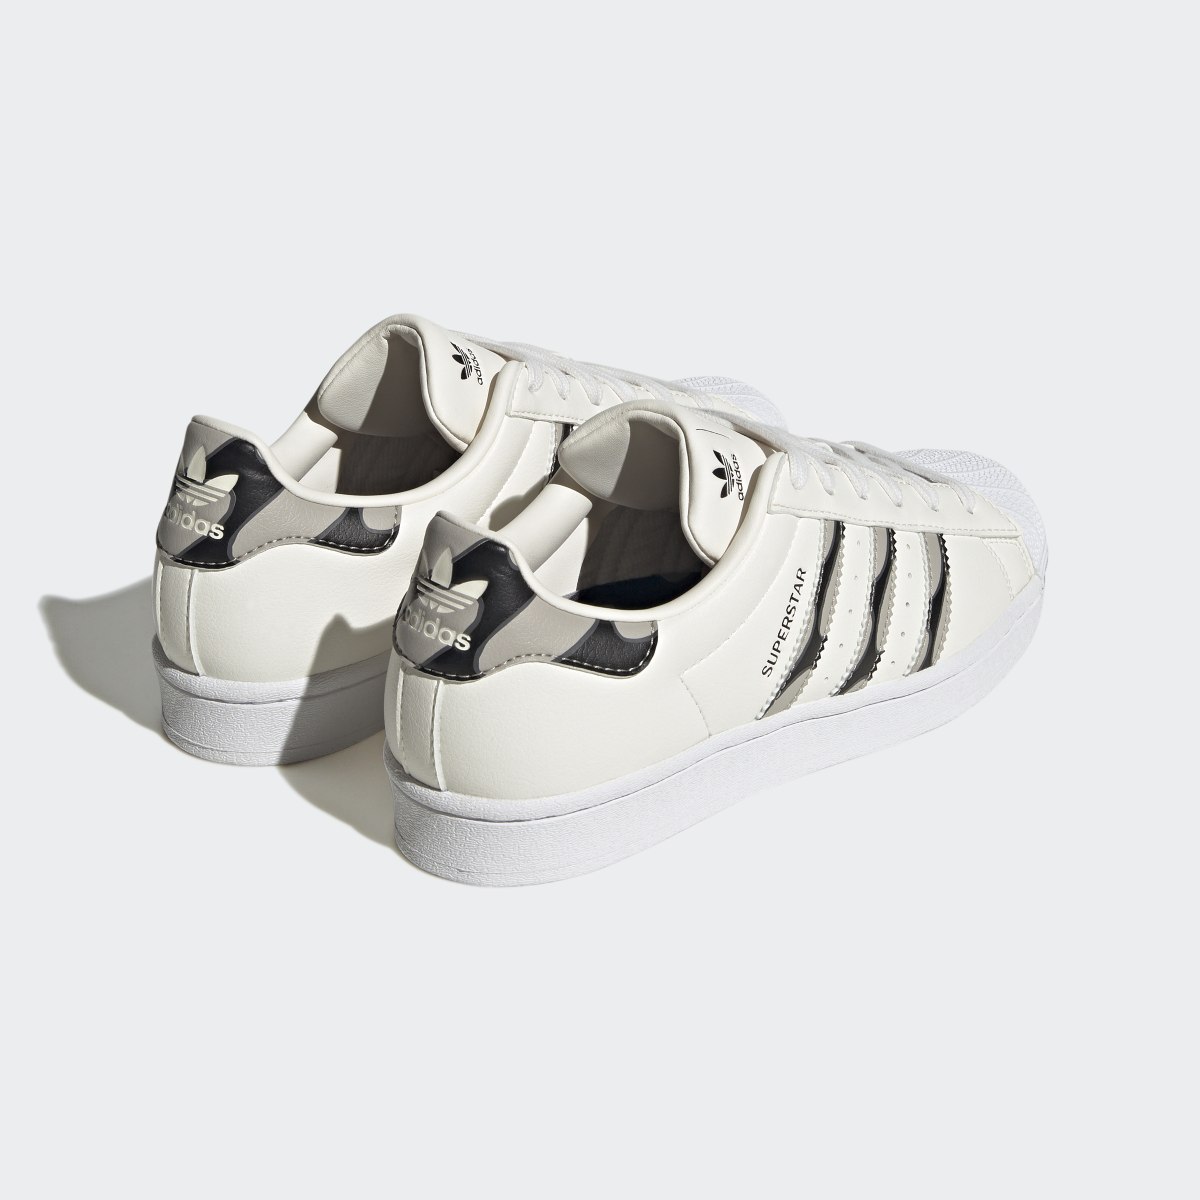 Adidas x Marimekko Superstar Shoes. 7